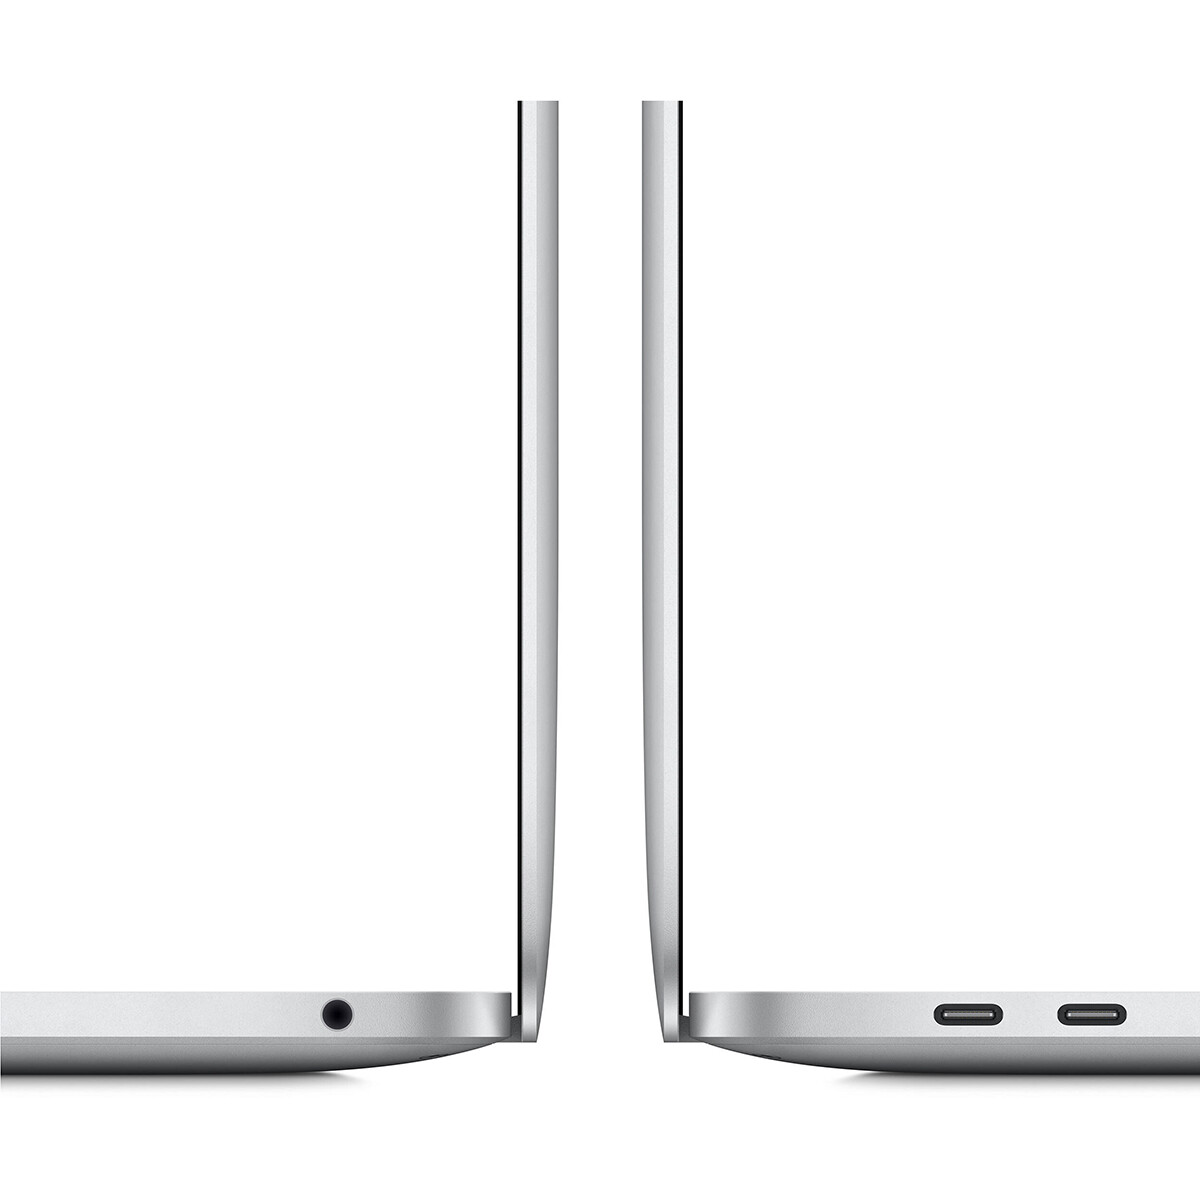 Macbook pro m1 13' touch bar 256gb / 8gb ram Silver